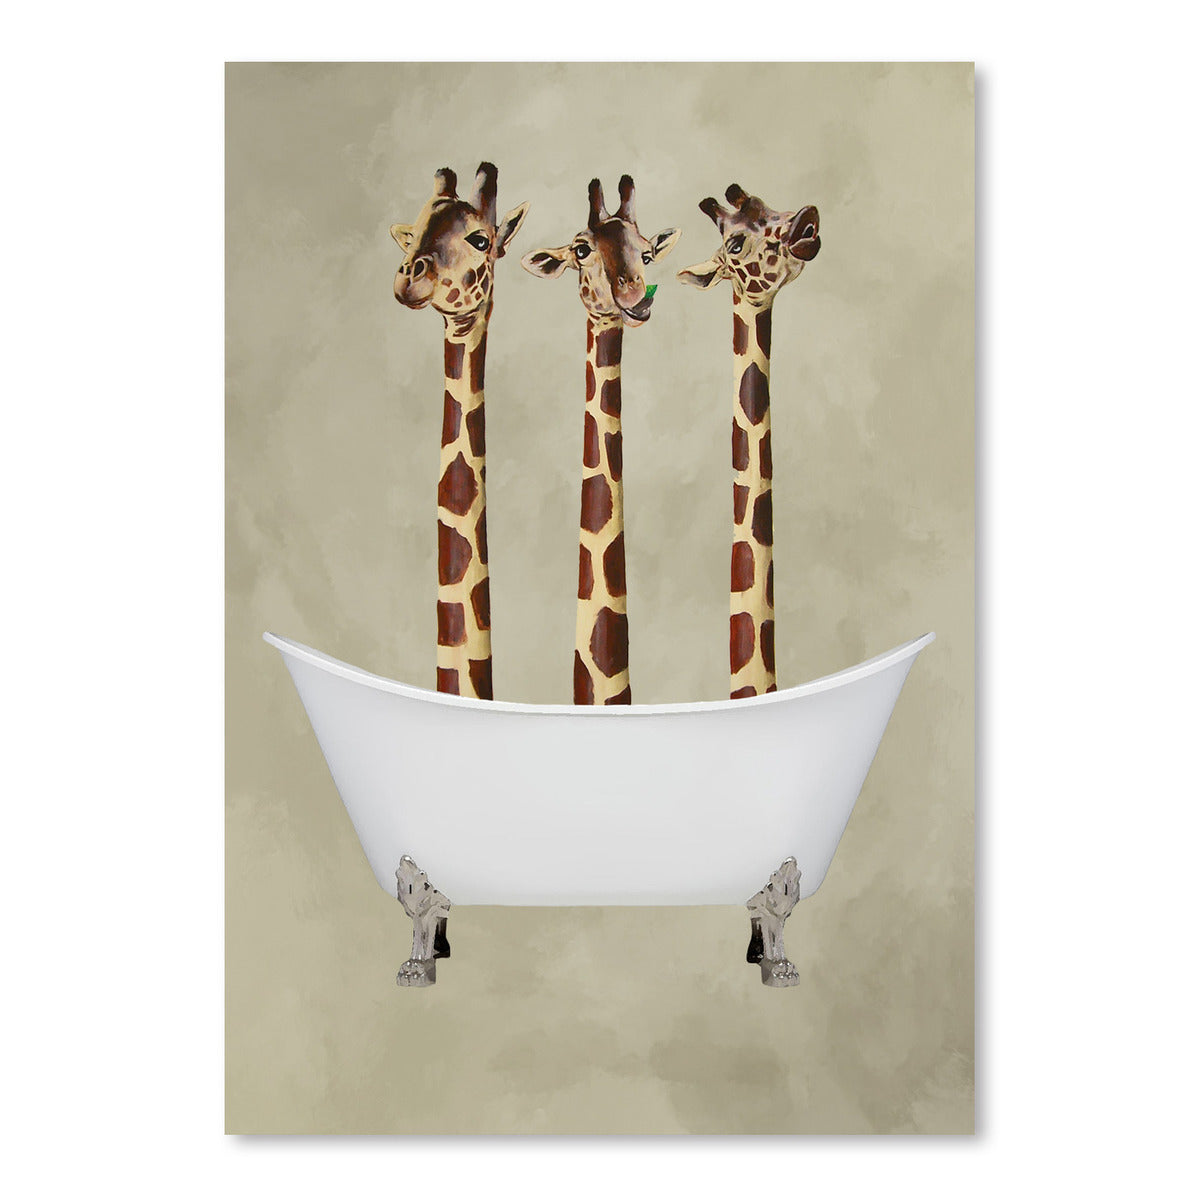 Giraffes In Bathtub by Coco de Paris - Art Print - Americanflat